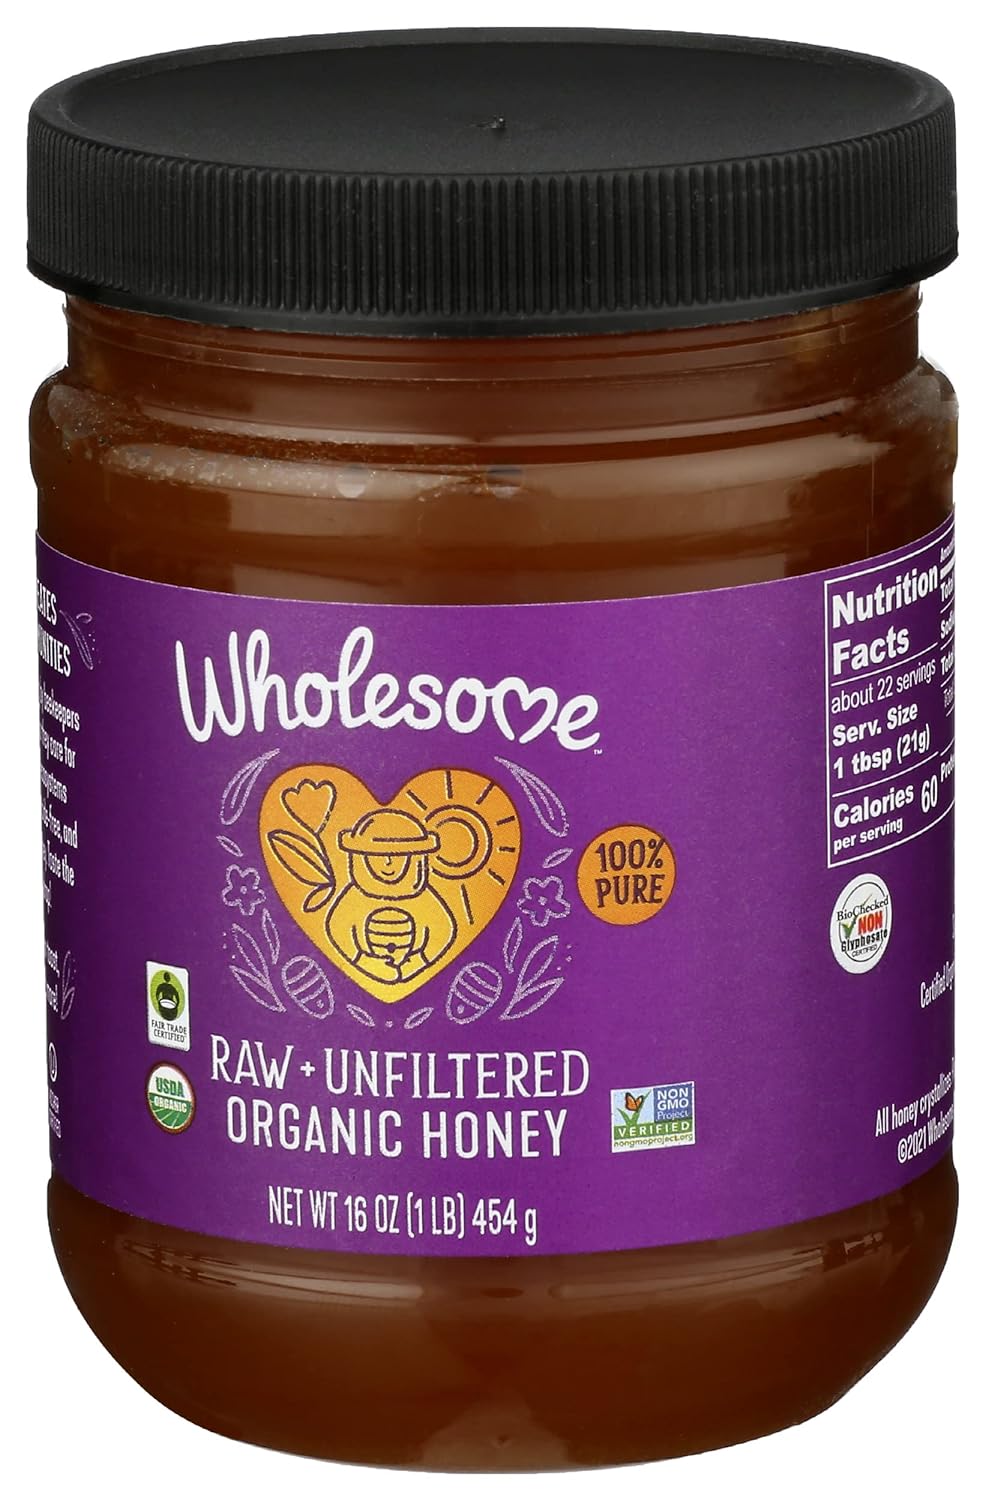 WHOLESOME SWEETENERS Honey FRTRD Raw Organic, 16 Ounce : Nut